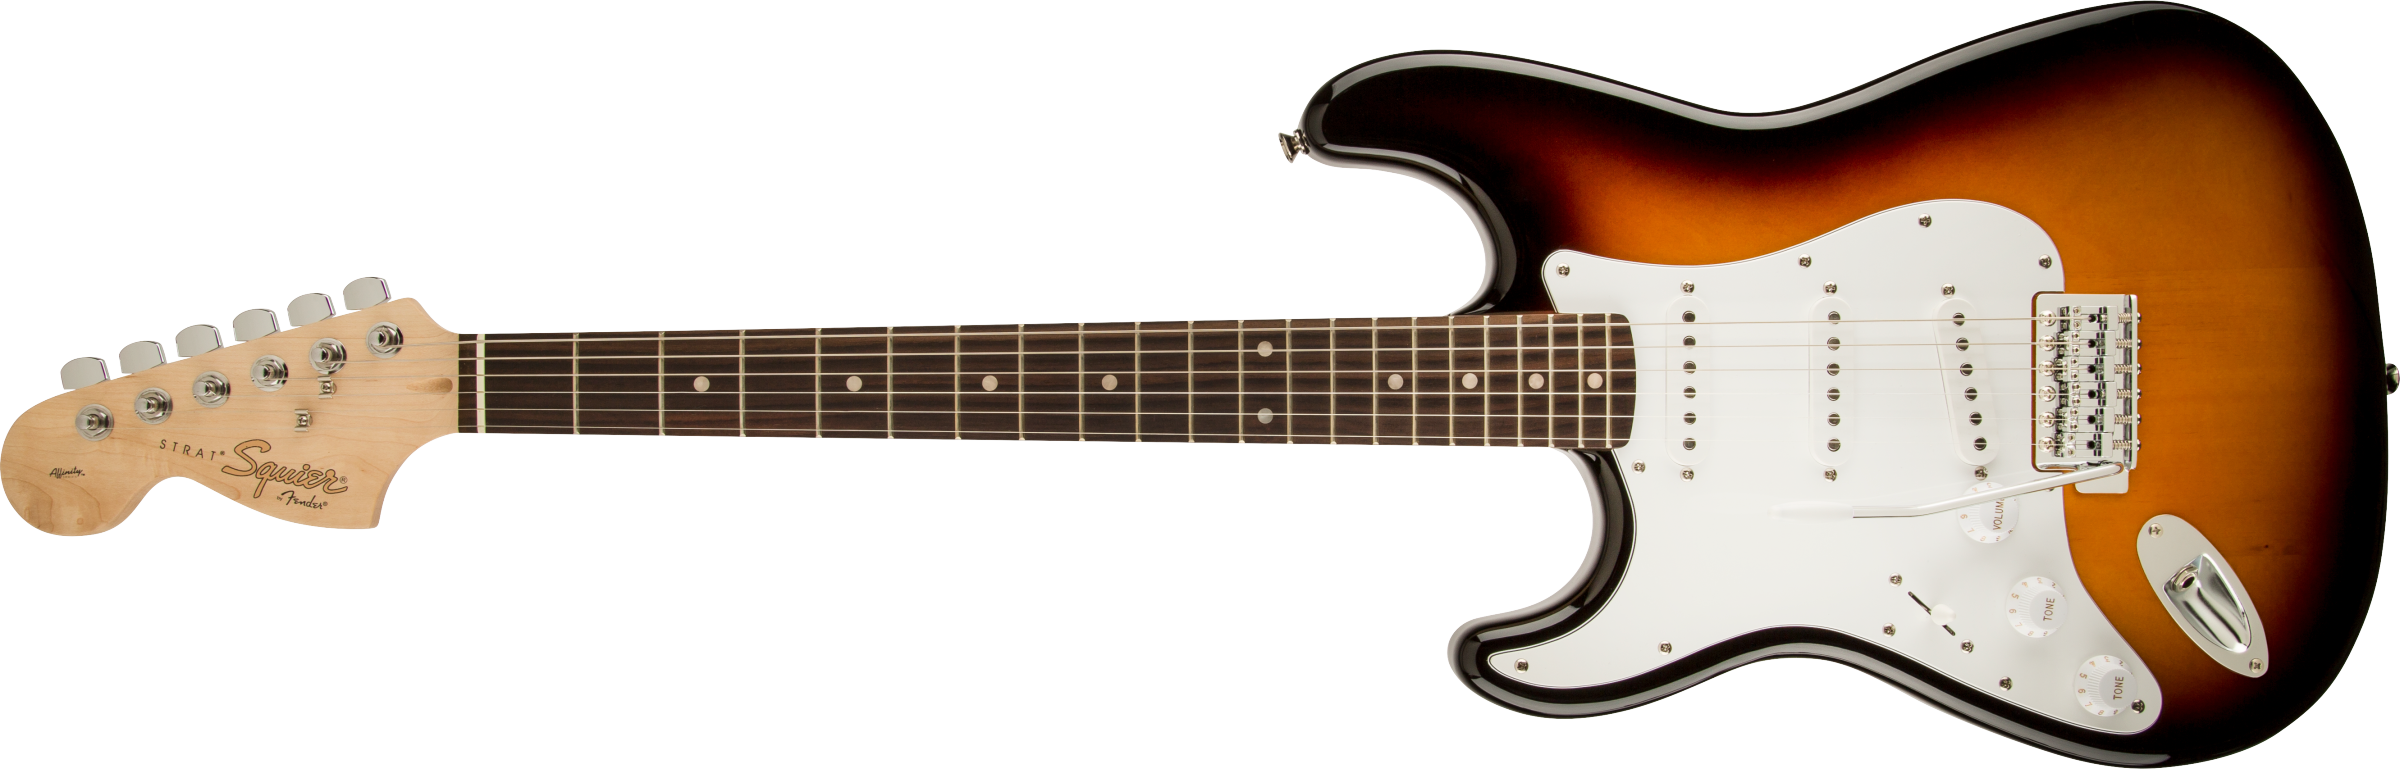 Fender Squier Affinity Series Stratocaster Lefty, Laurel FB Brown Sunburst